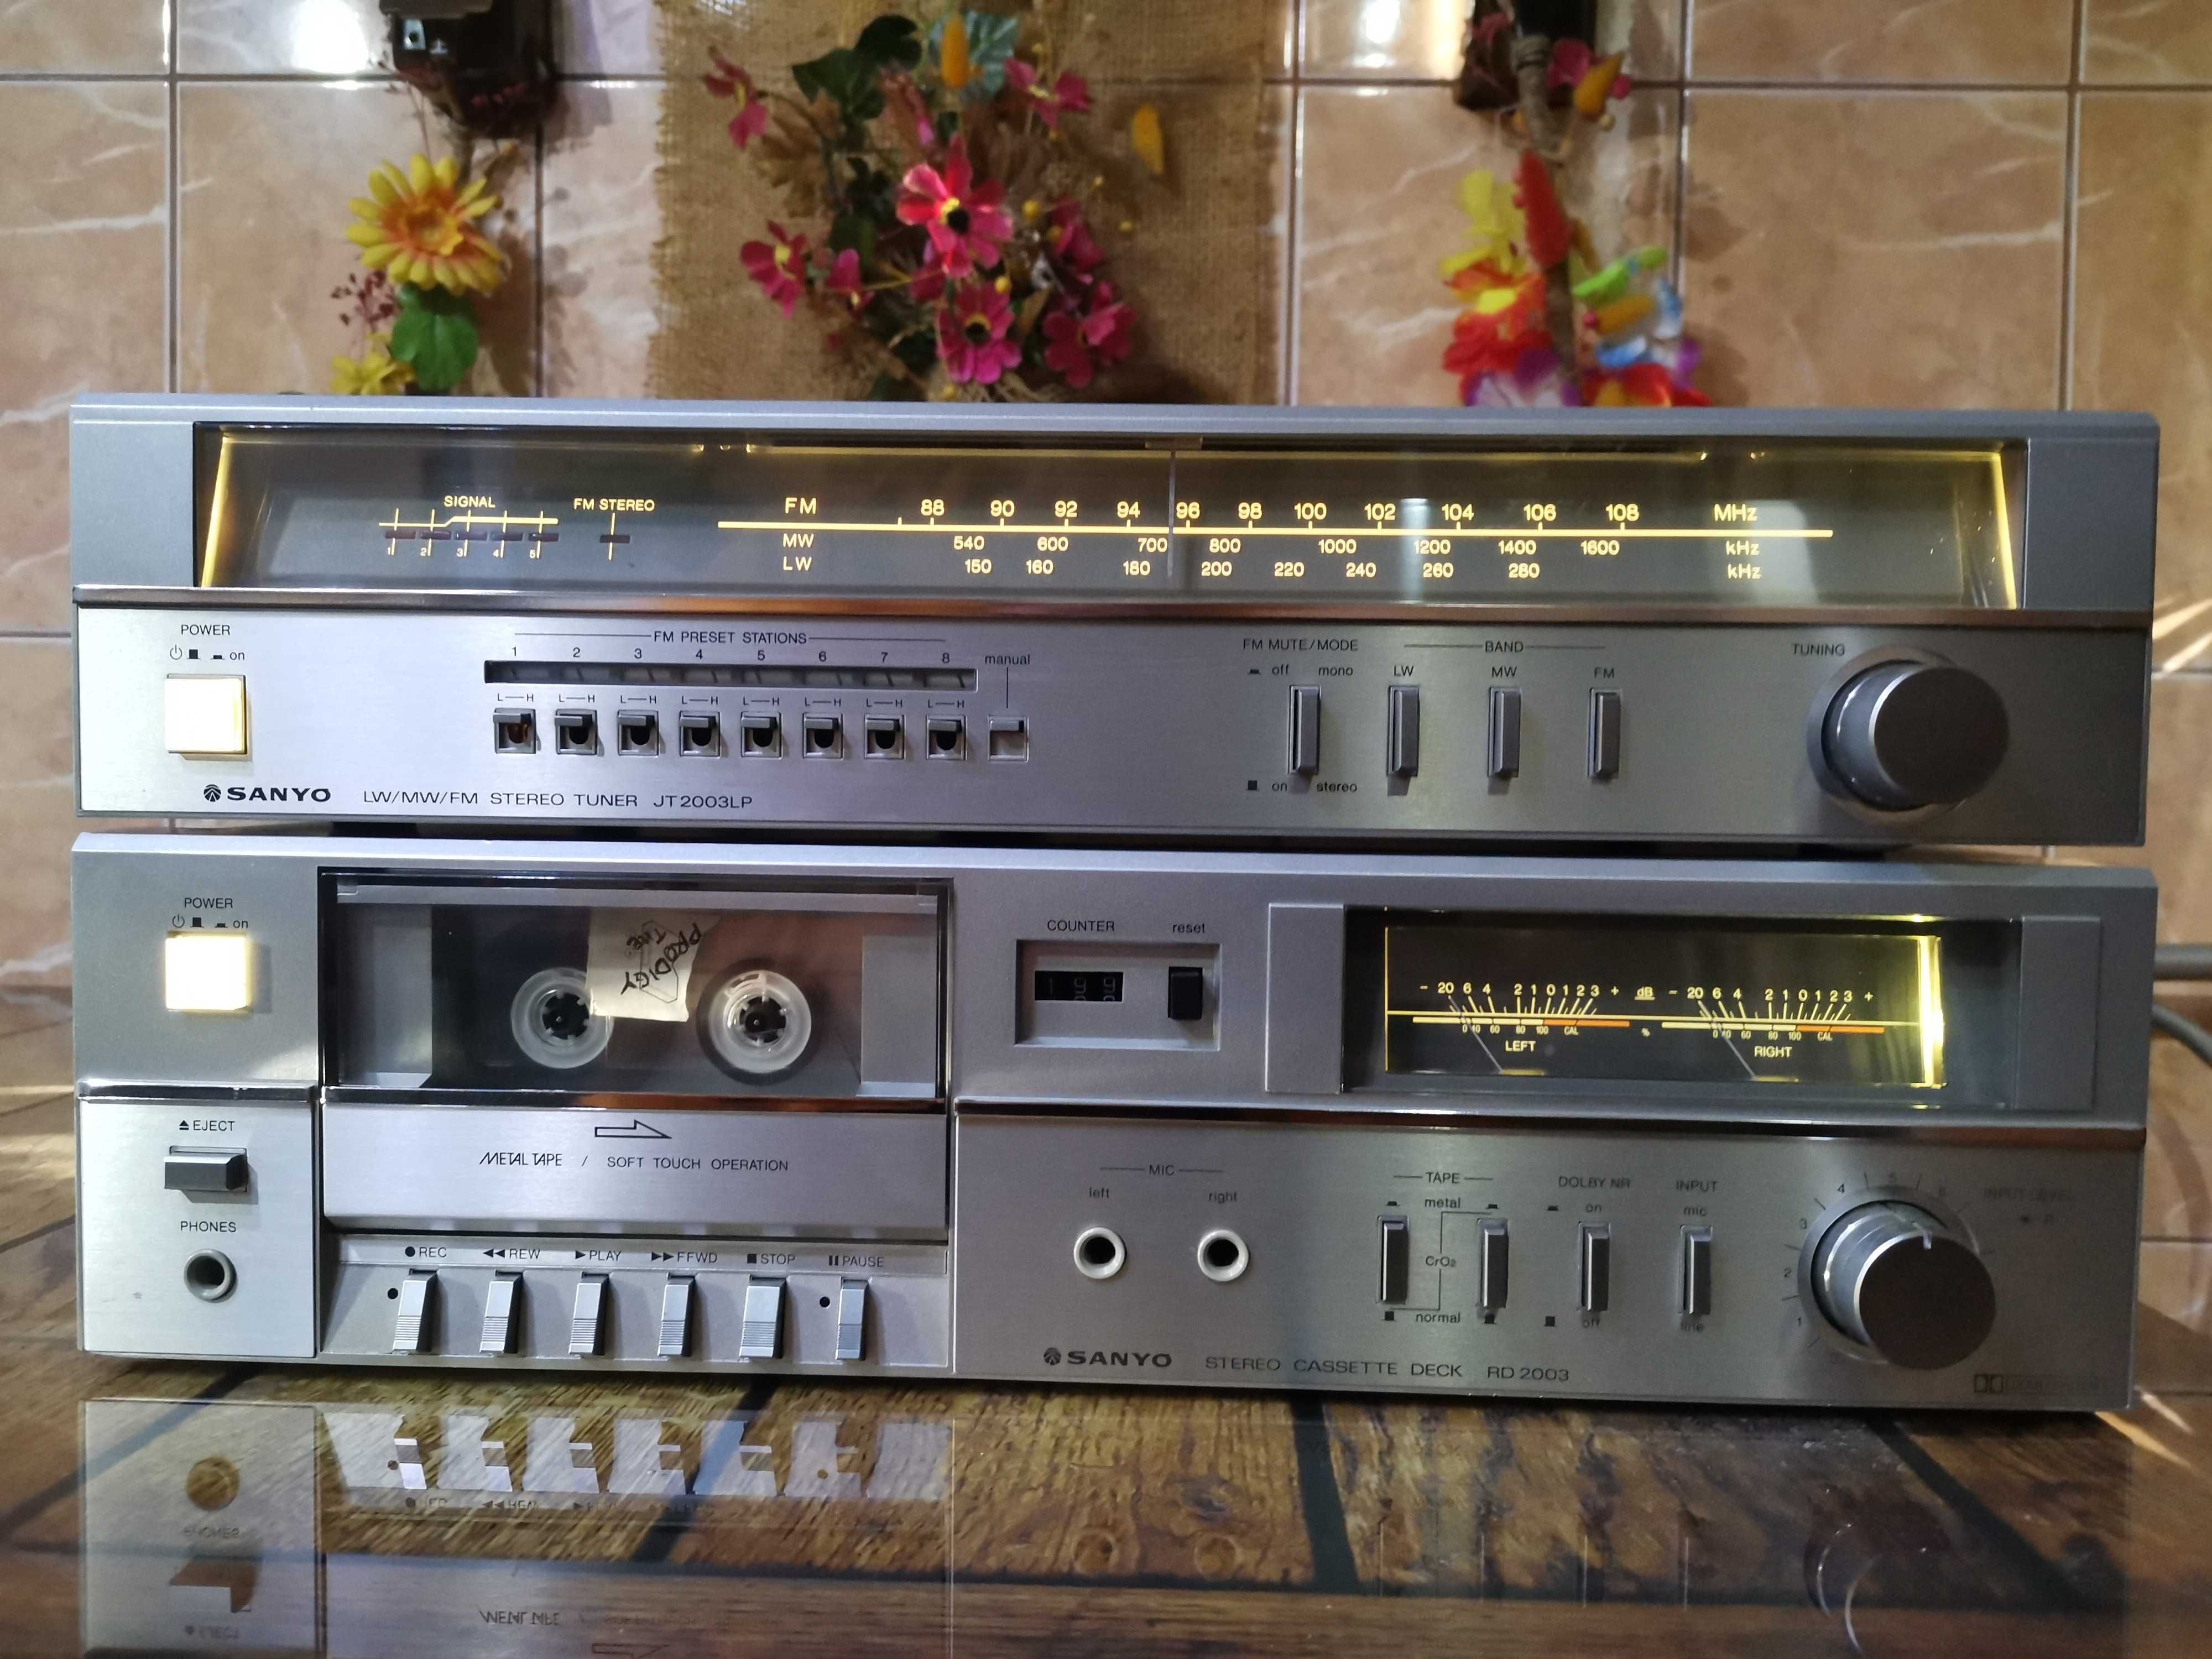 Sanyo stereo cassette deck + tuner